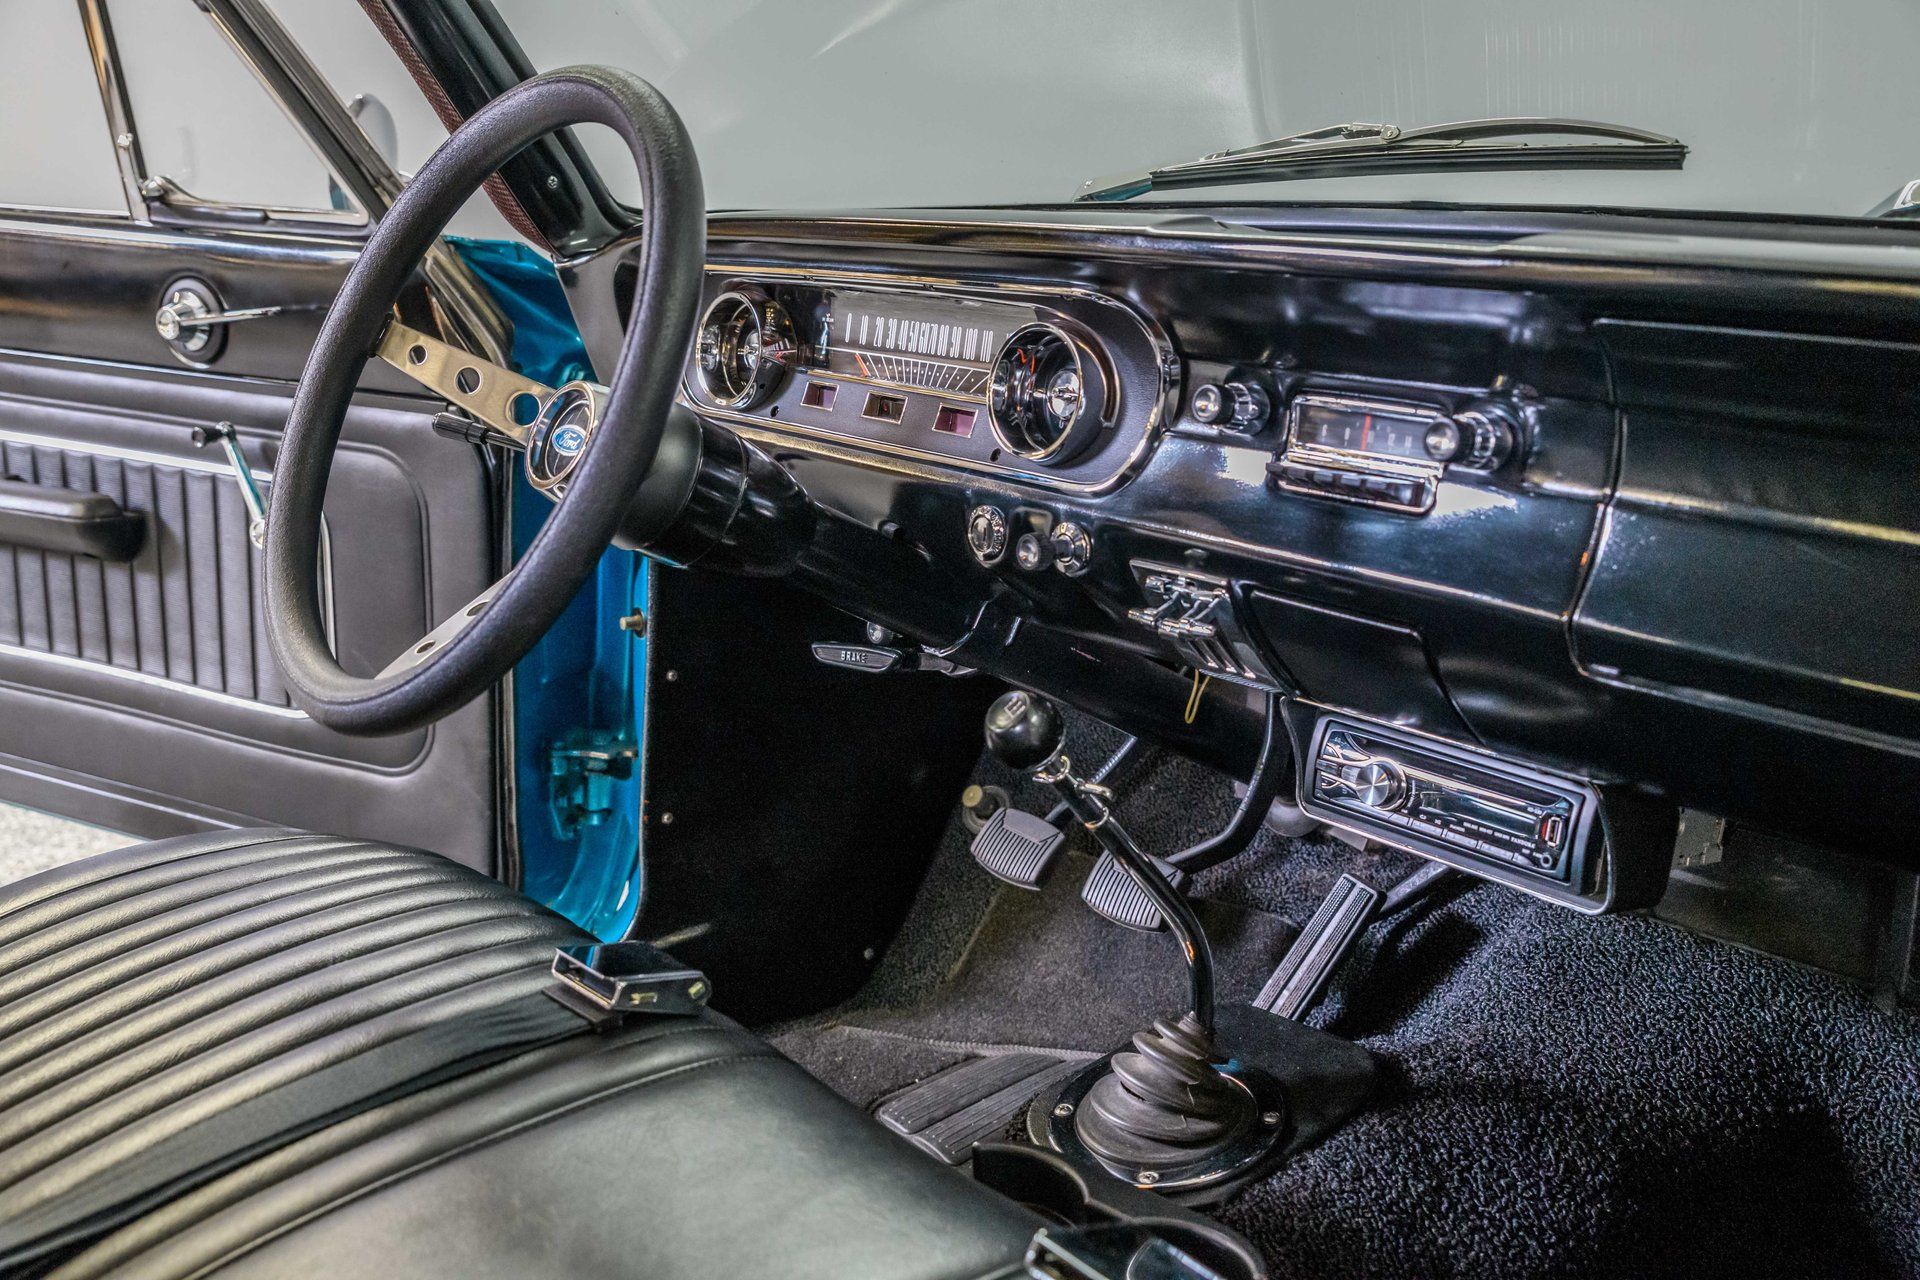 The 1965 Ford Falcon Futura interior, with an open door